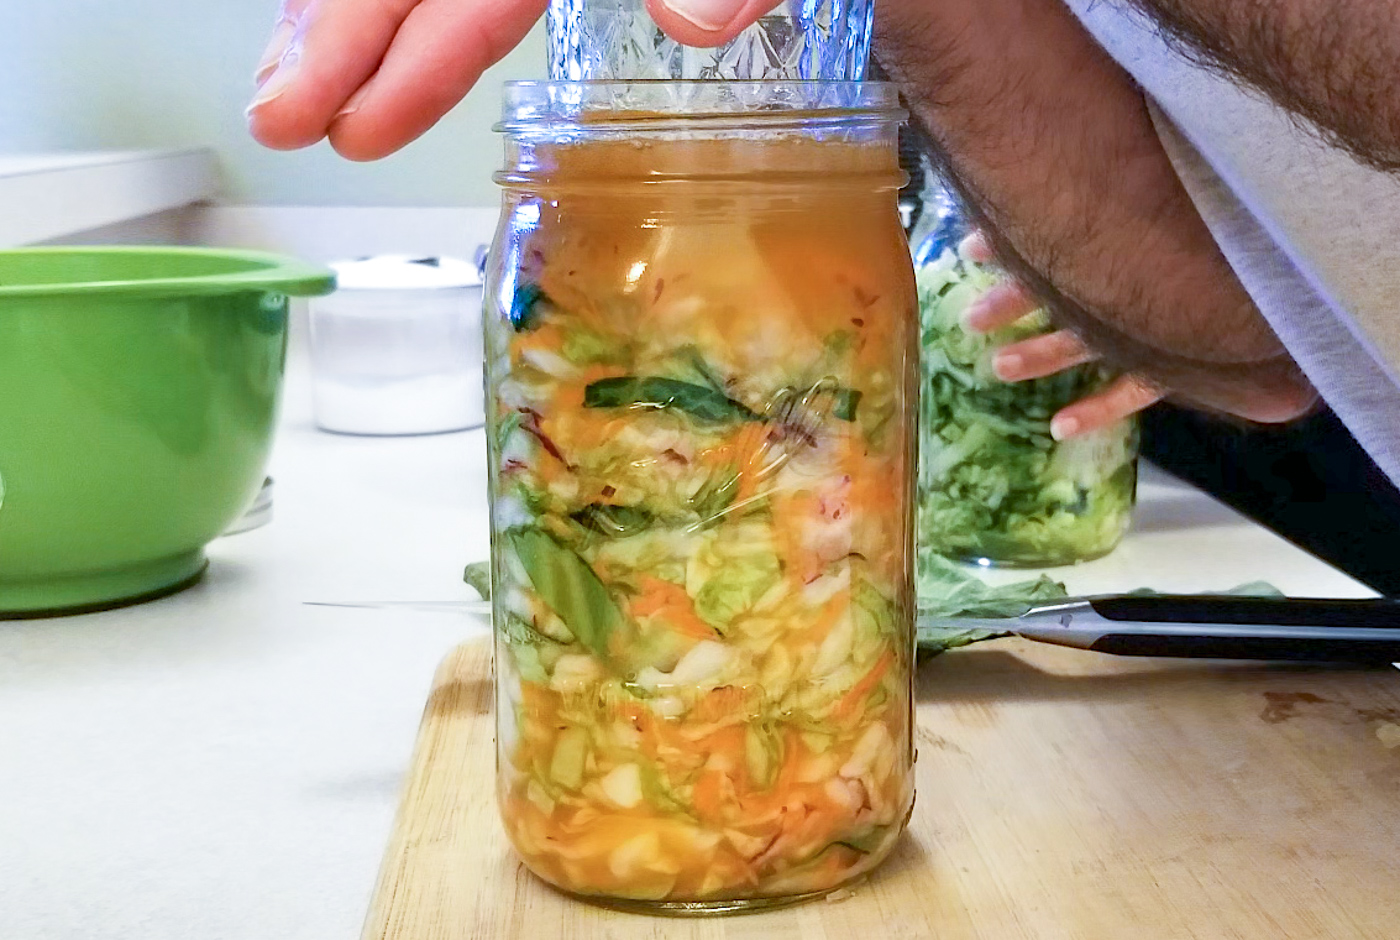 Making sauerkraut using fermentation weights or jar